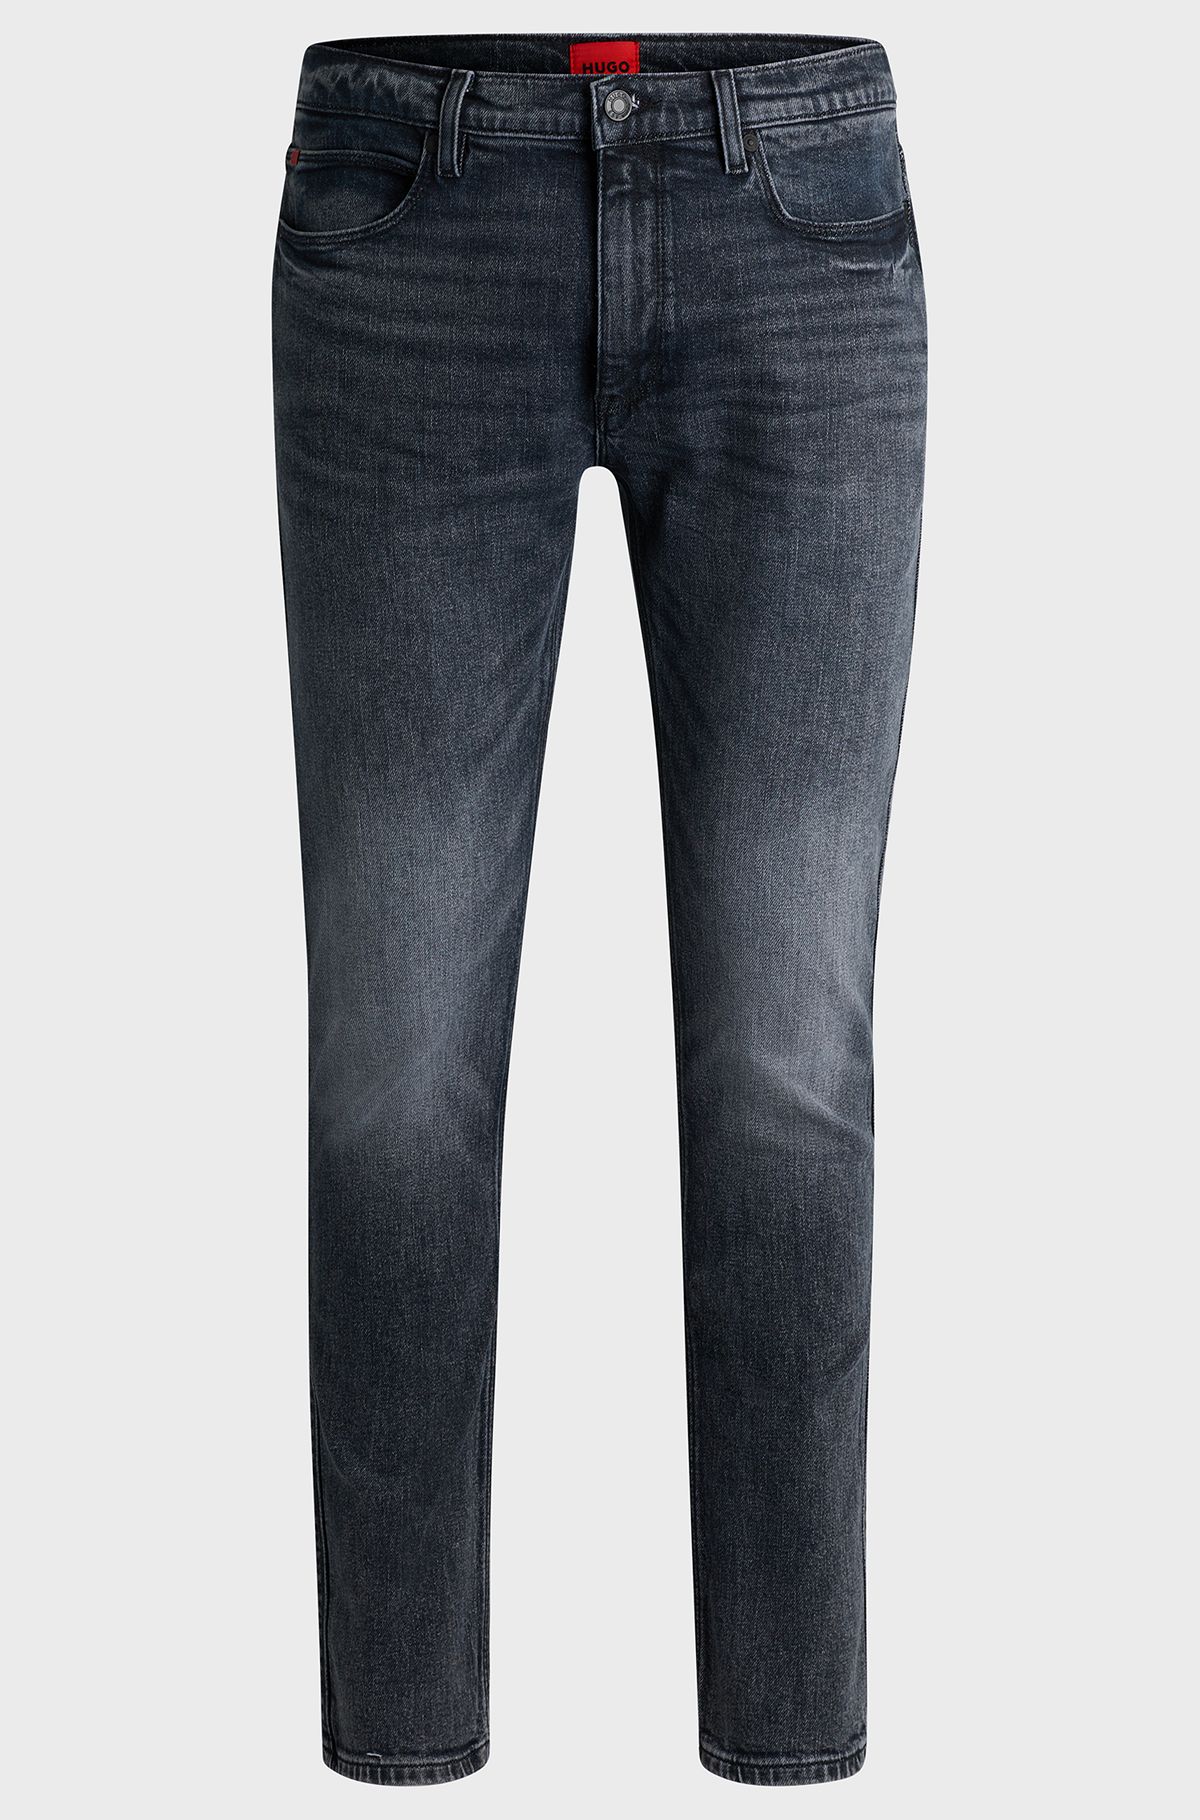 Extra-slim-fit jeans in dark-blue stretch denim, Dark Grey